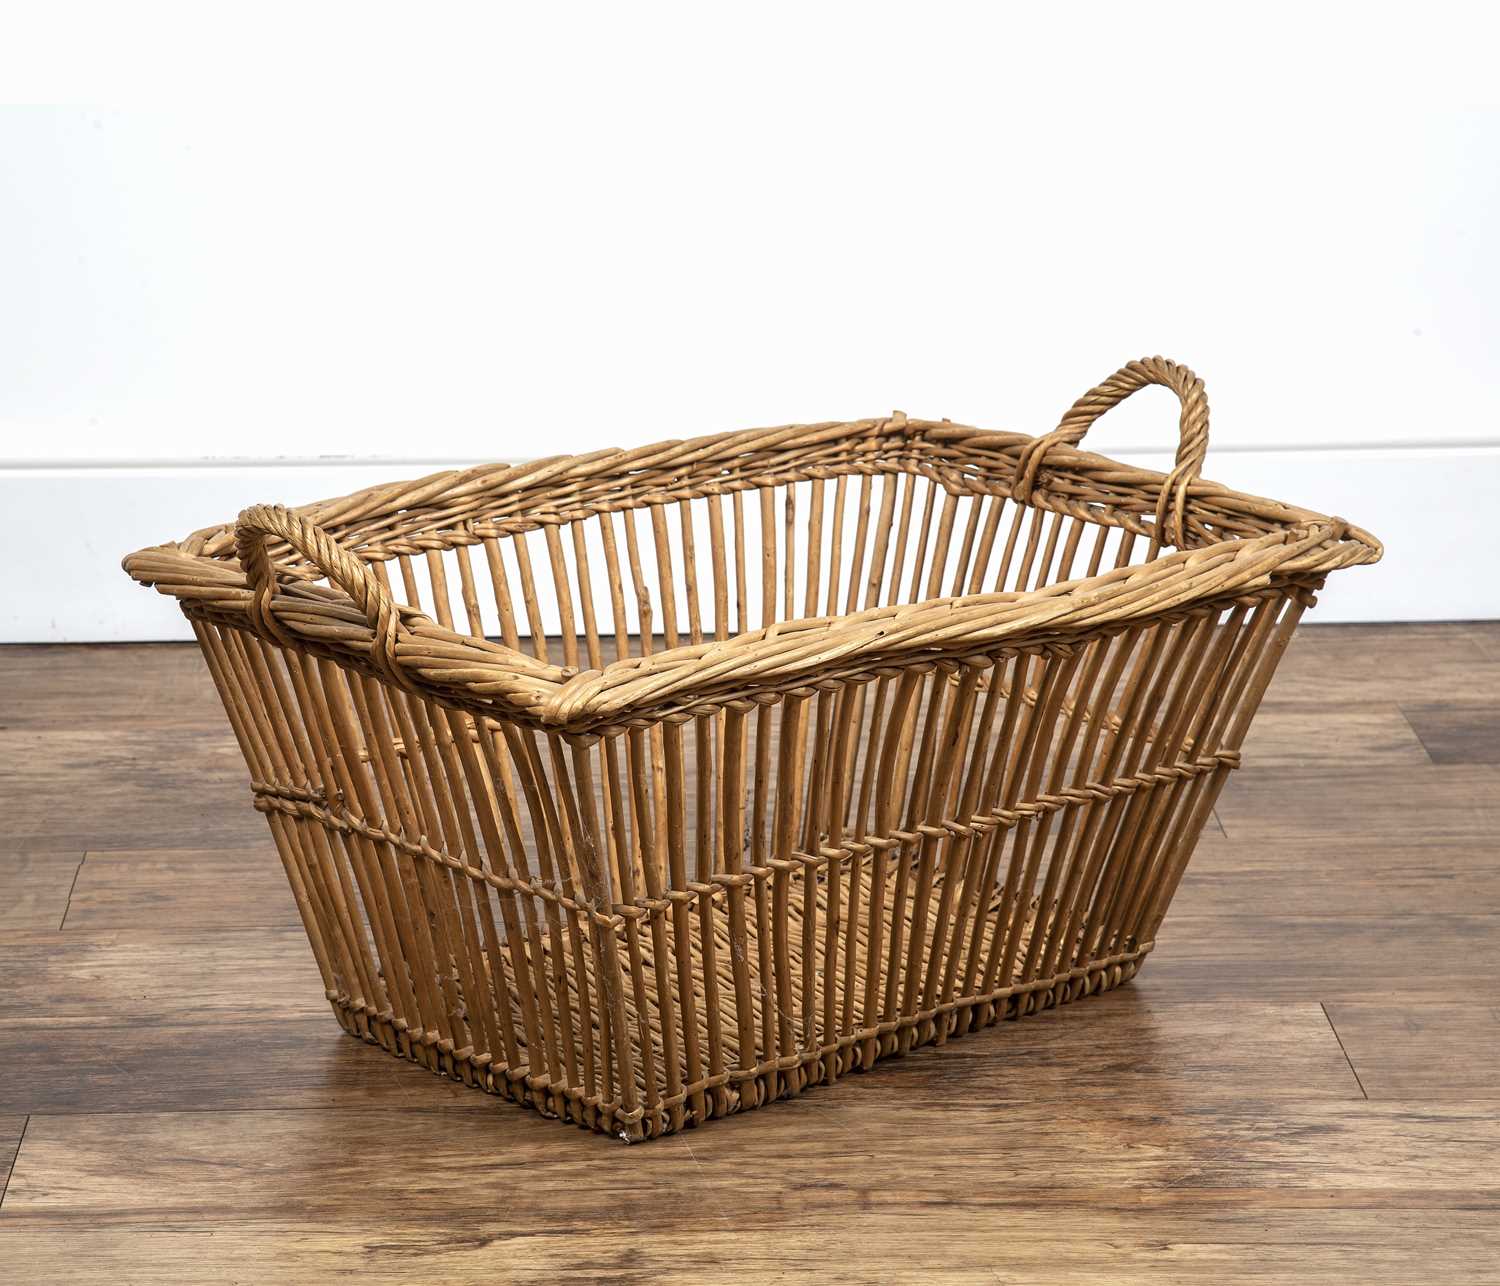 Wicker basket 20th Century, handmade with twin loop handles, 70cm wide x 31cm high x 46cm deepAt